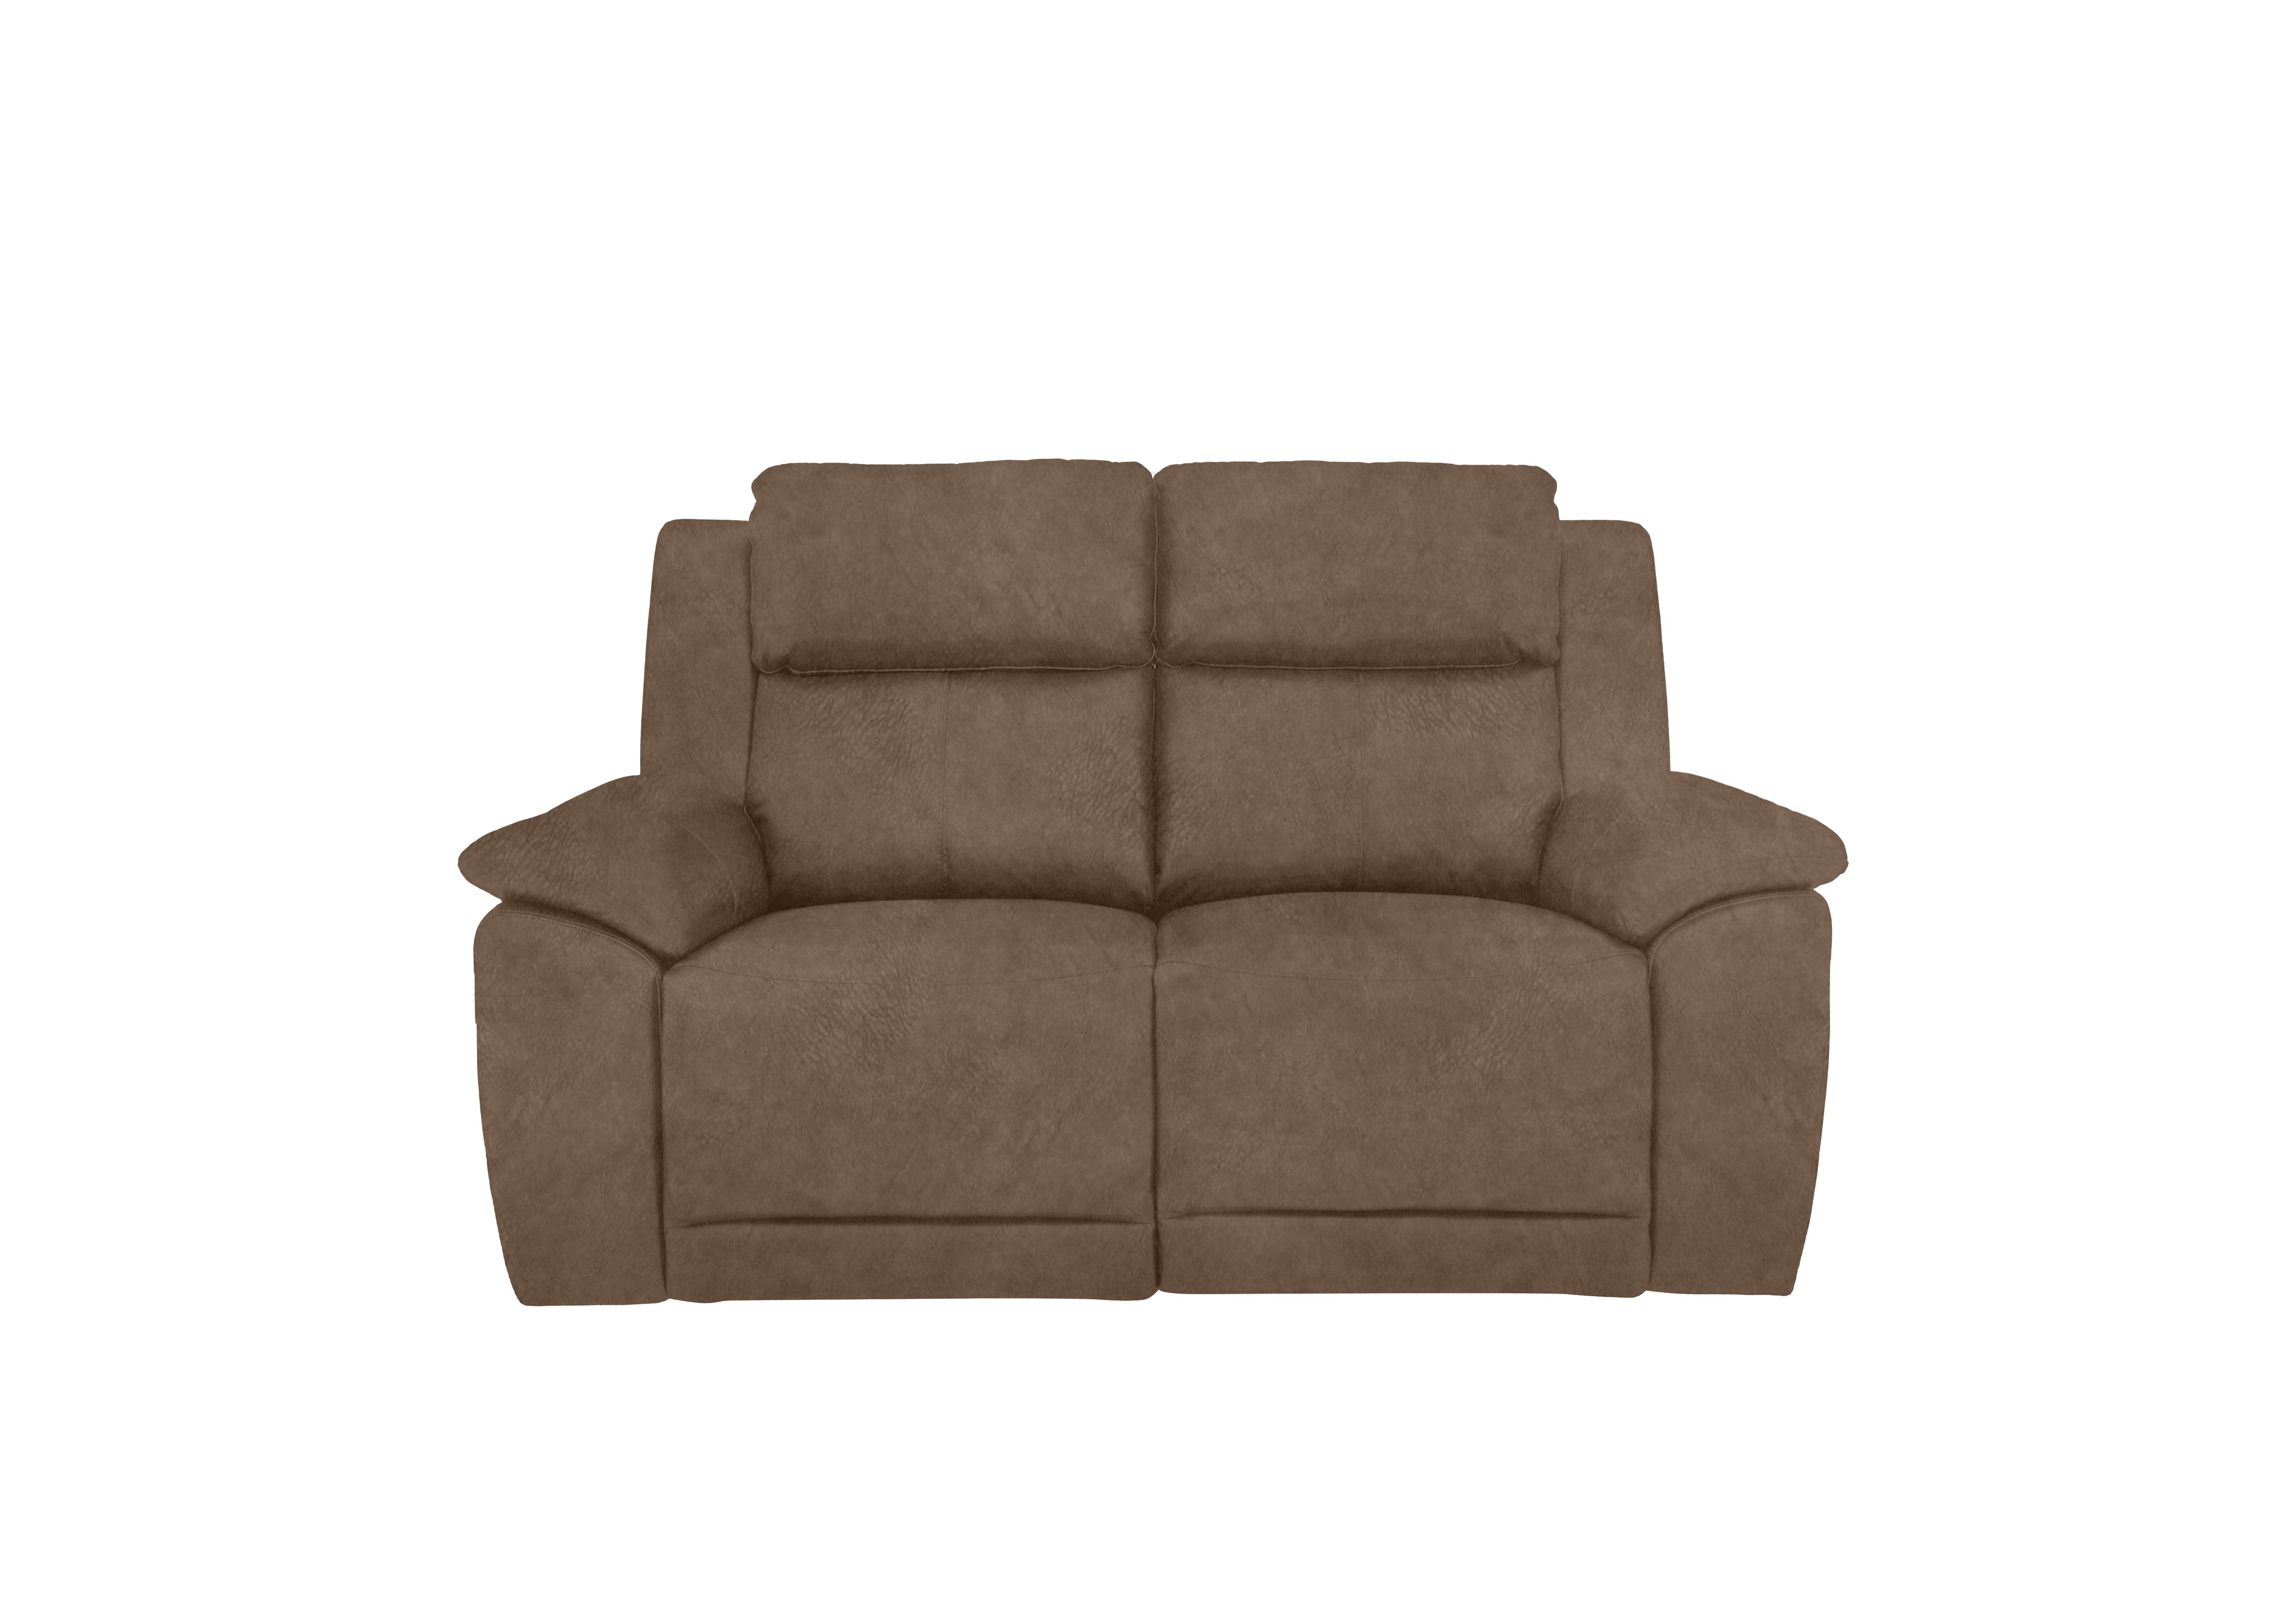 Utah 2 Seater Fabric Sofa in Classic Brown Be-0105 on Furniture Village